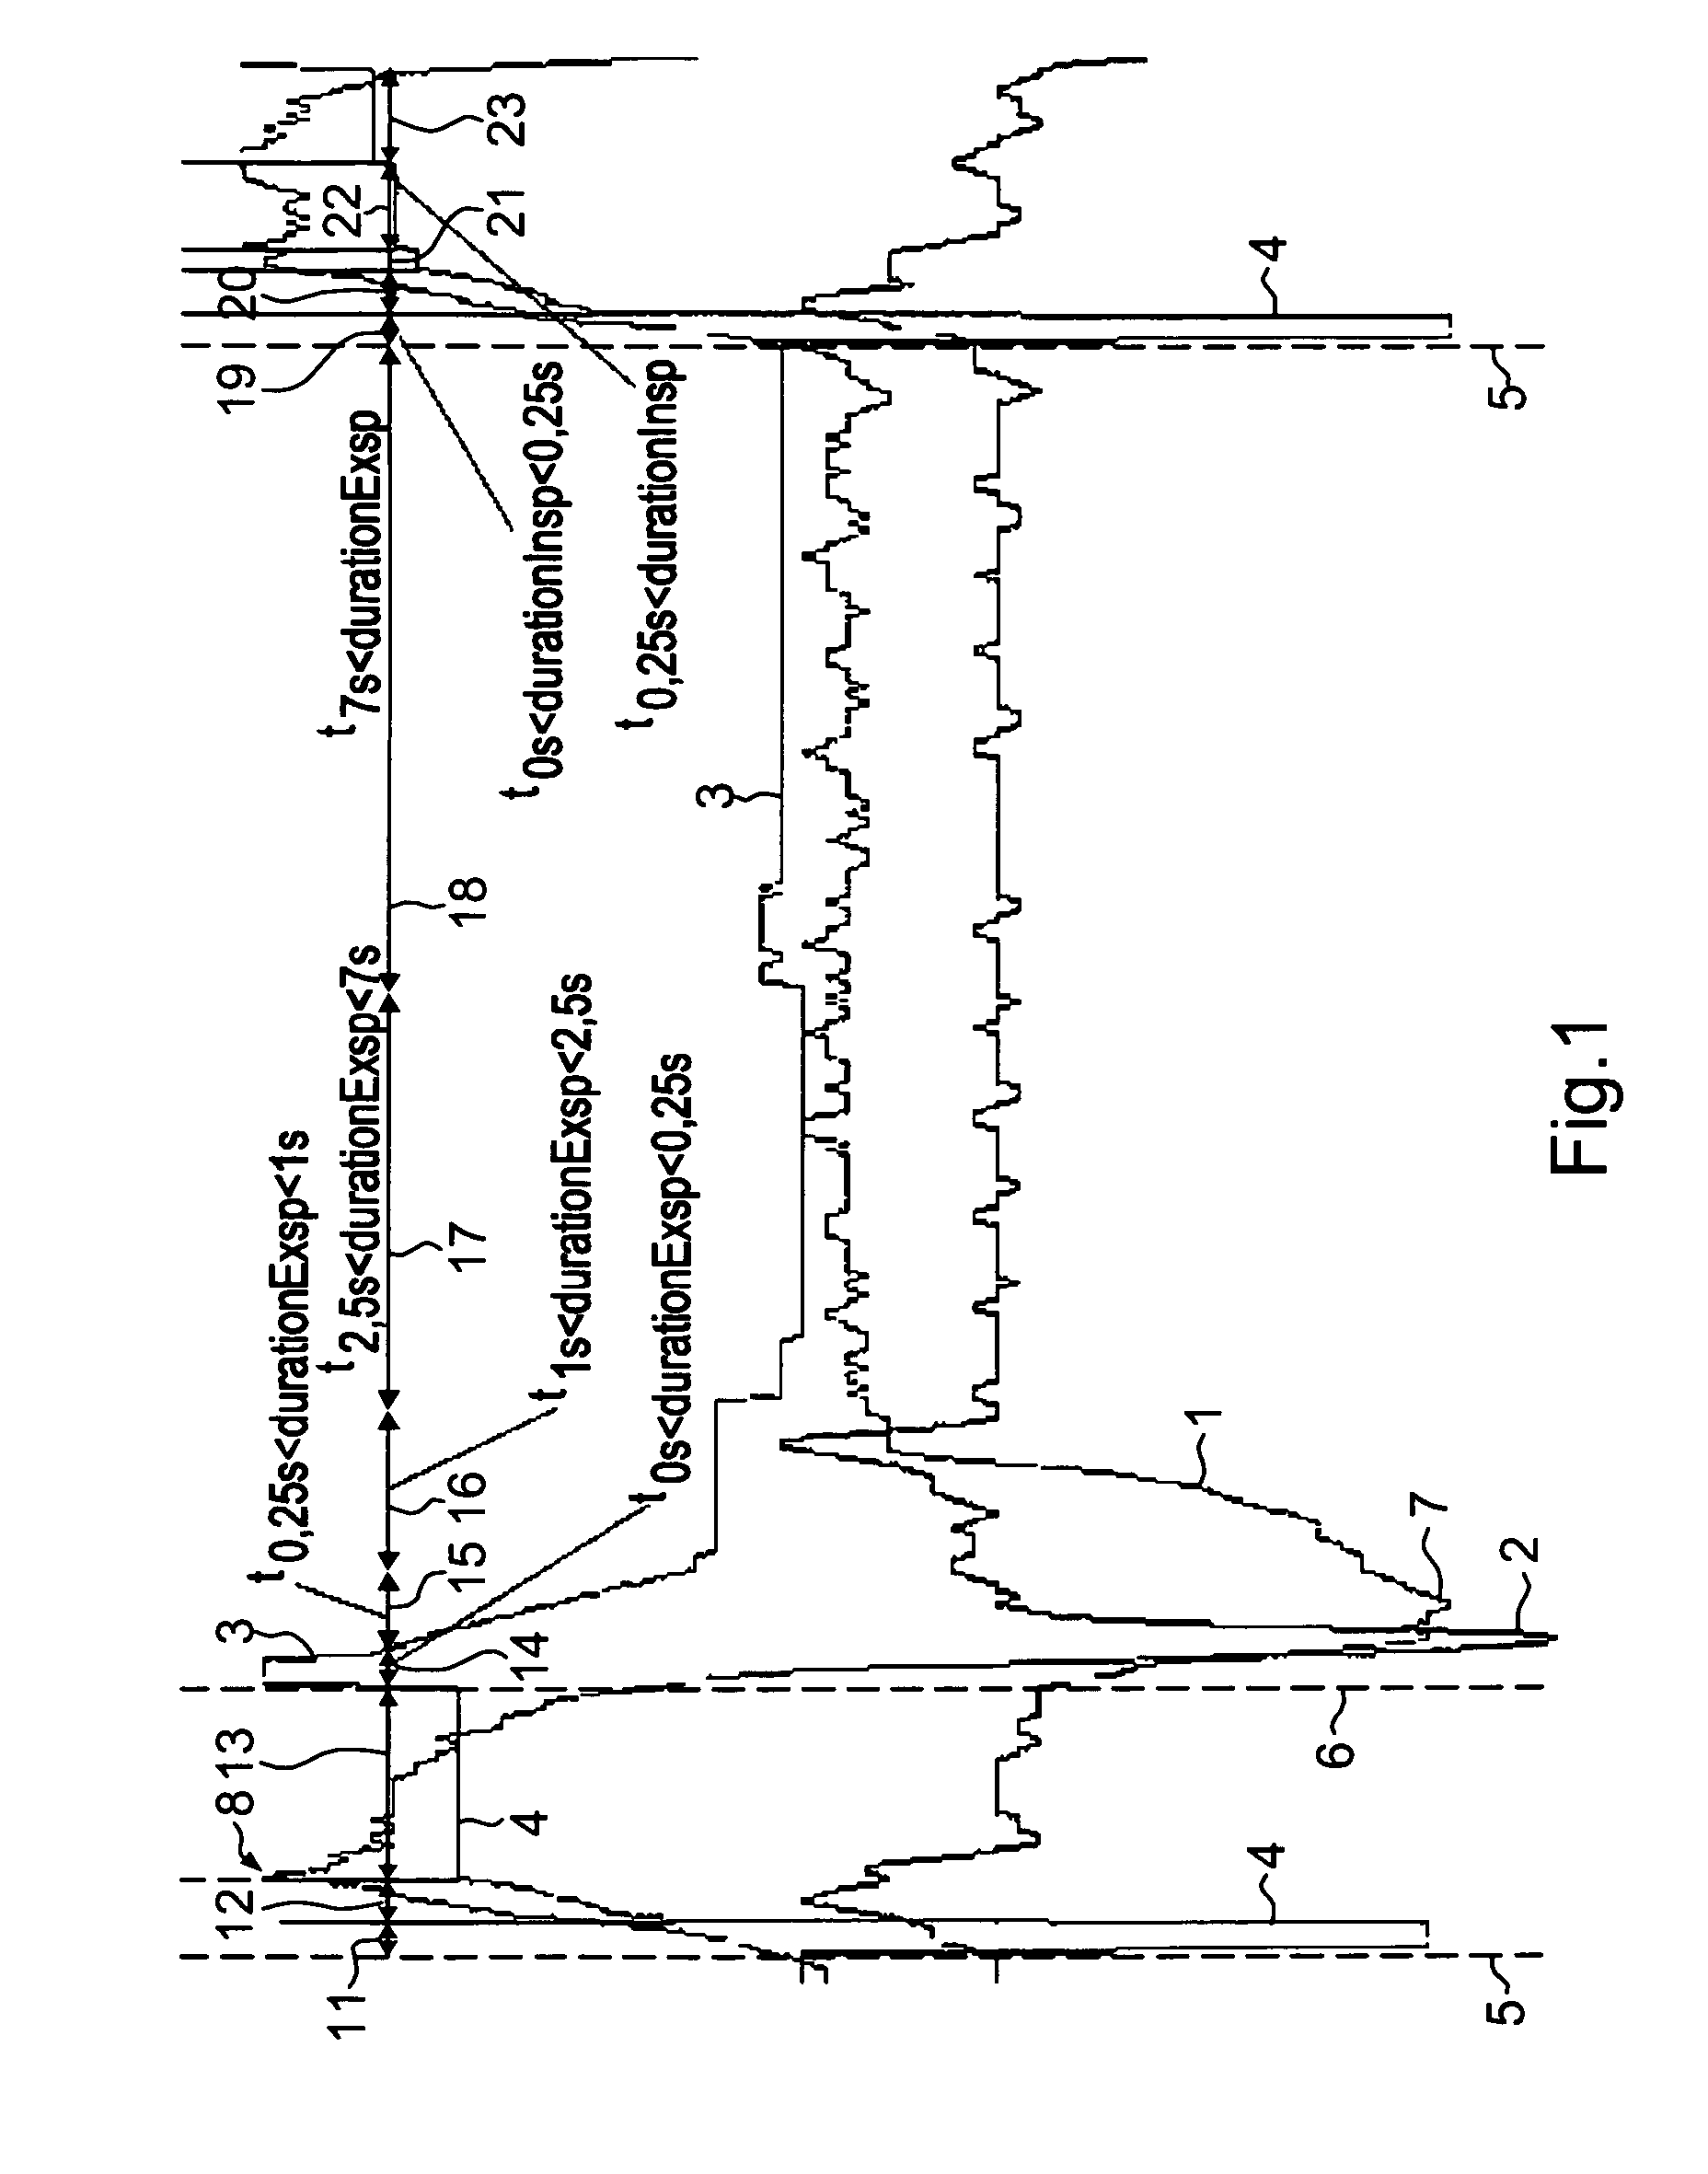 Method for controlling a bi-level apparatus, and bi-level apparatus